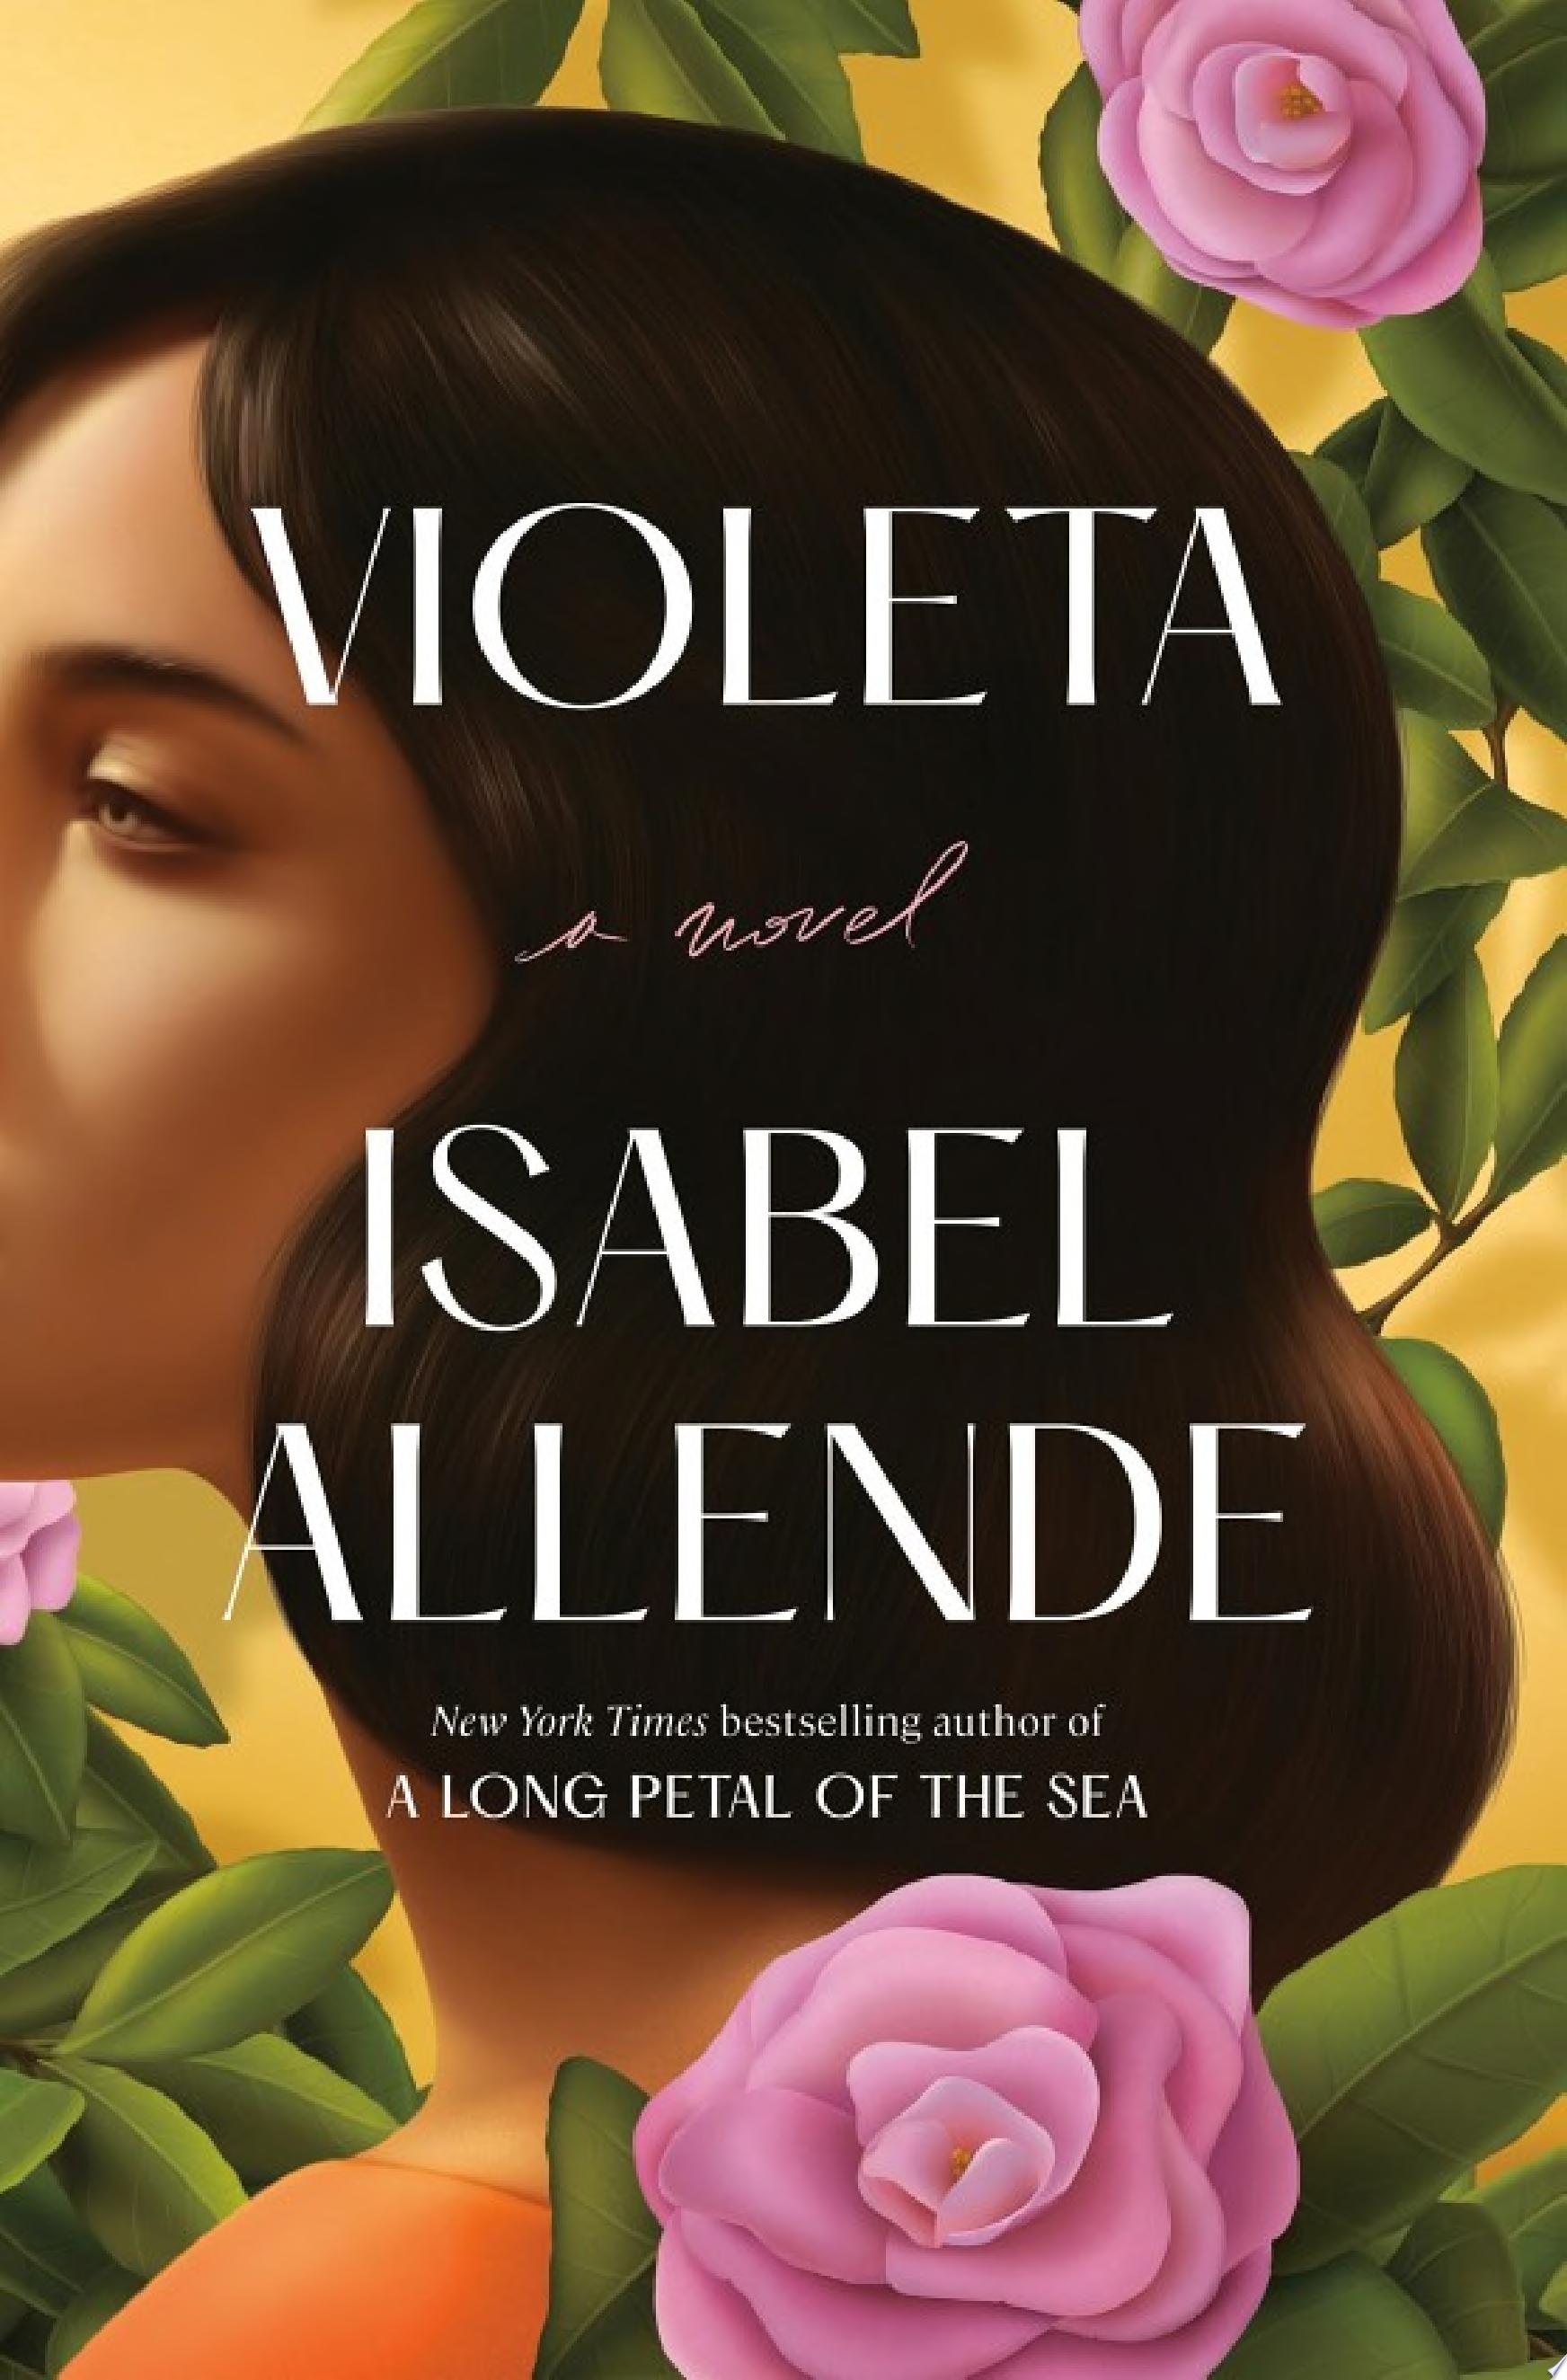 Image for "Violeta [English Edition]"